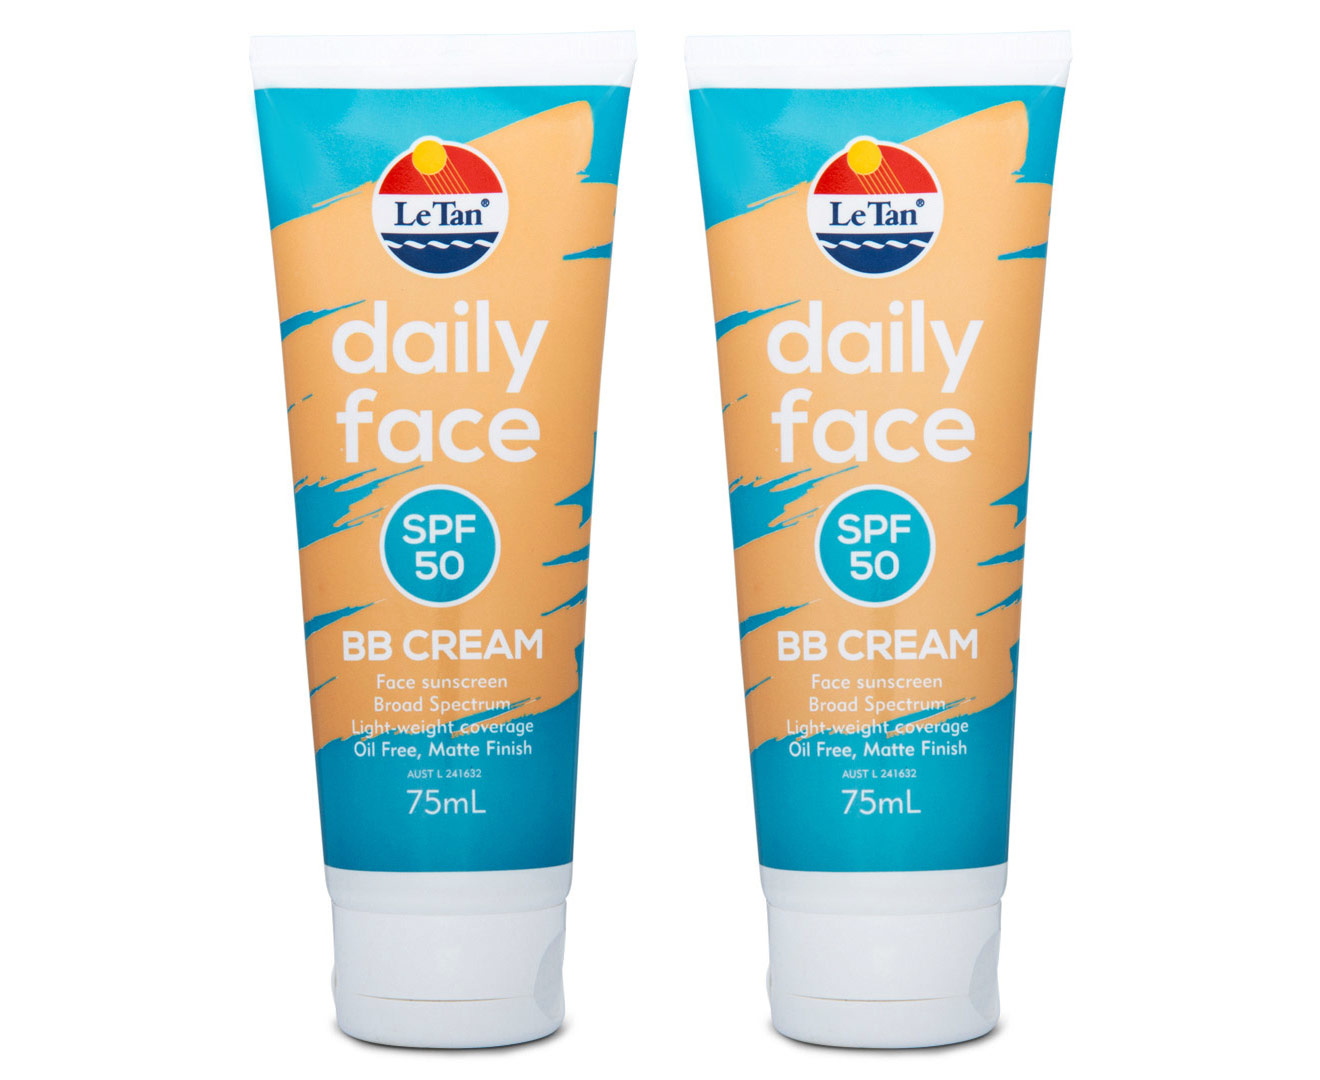 2 x Le Tan Daily Face BB Cream SPF50 75mL